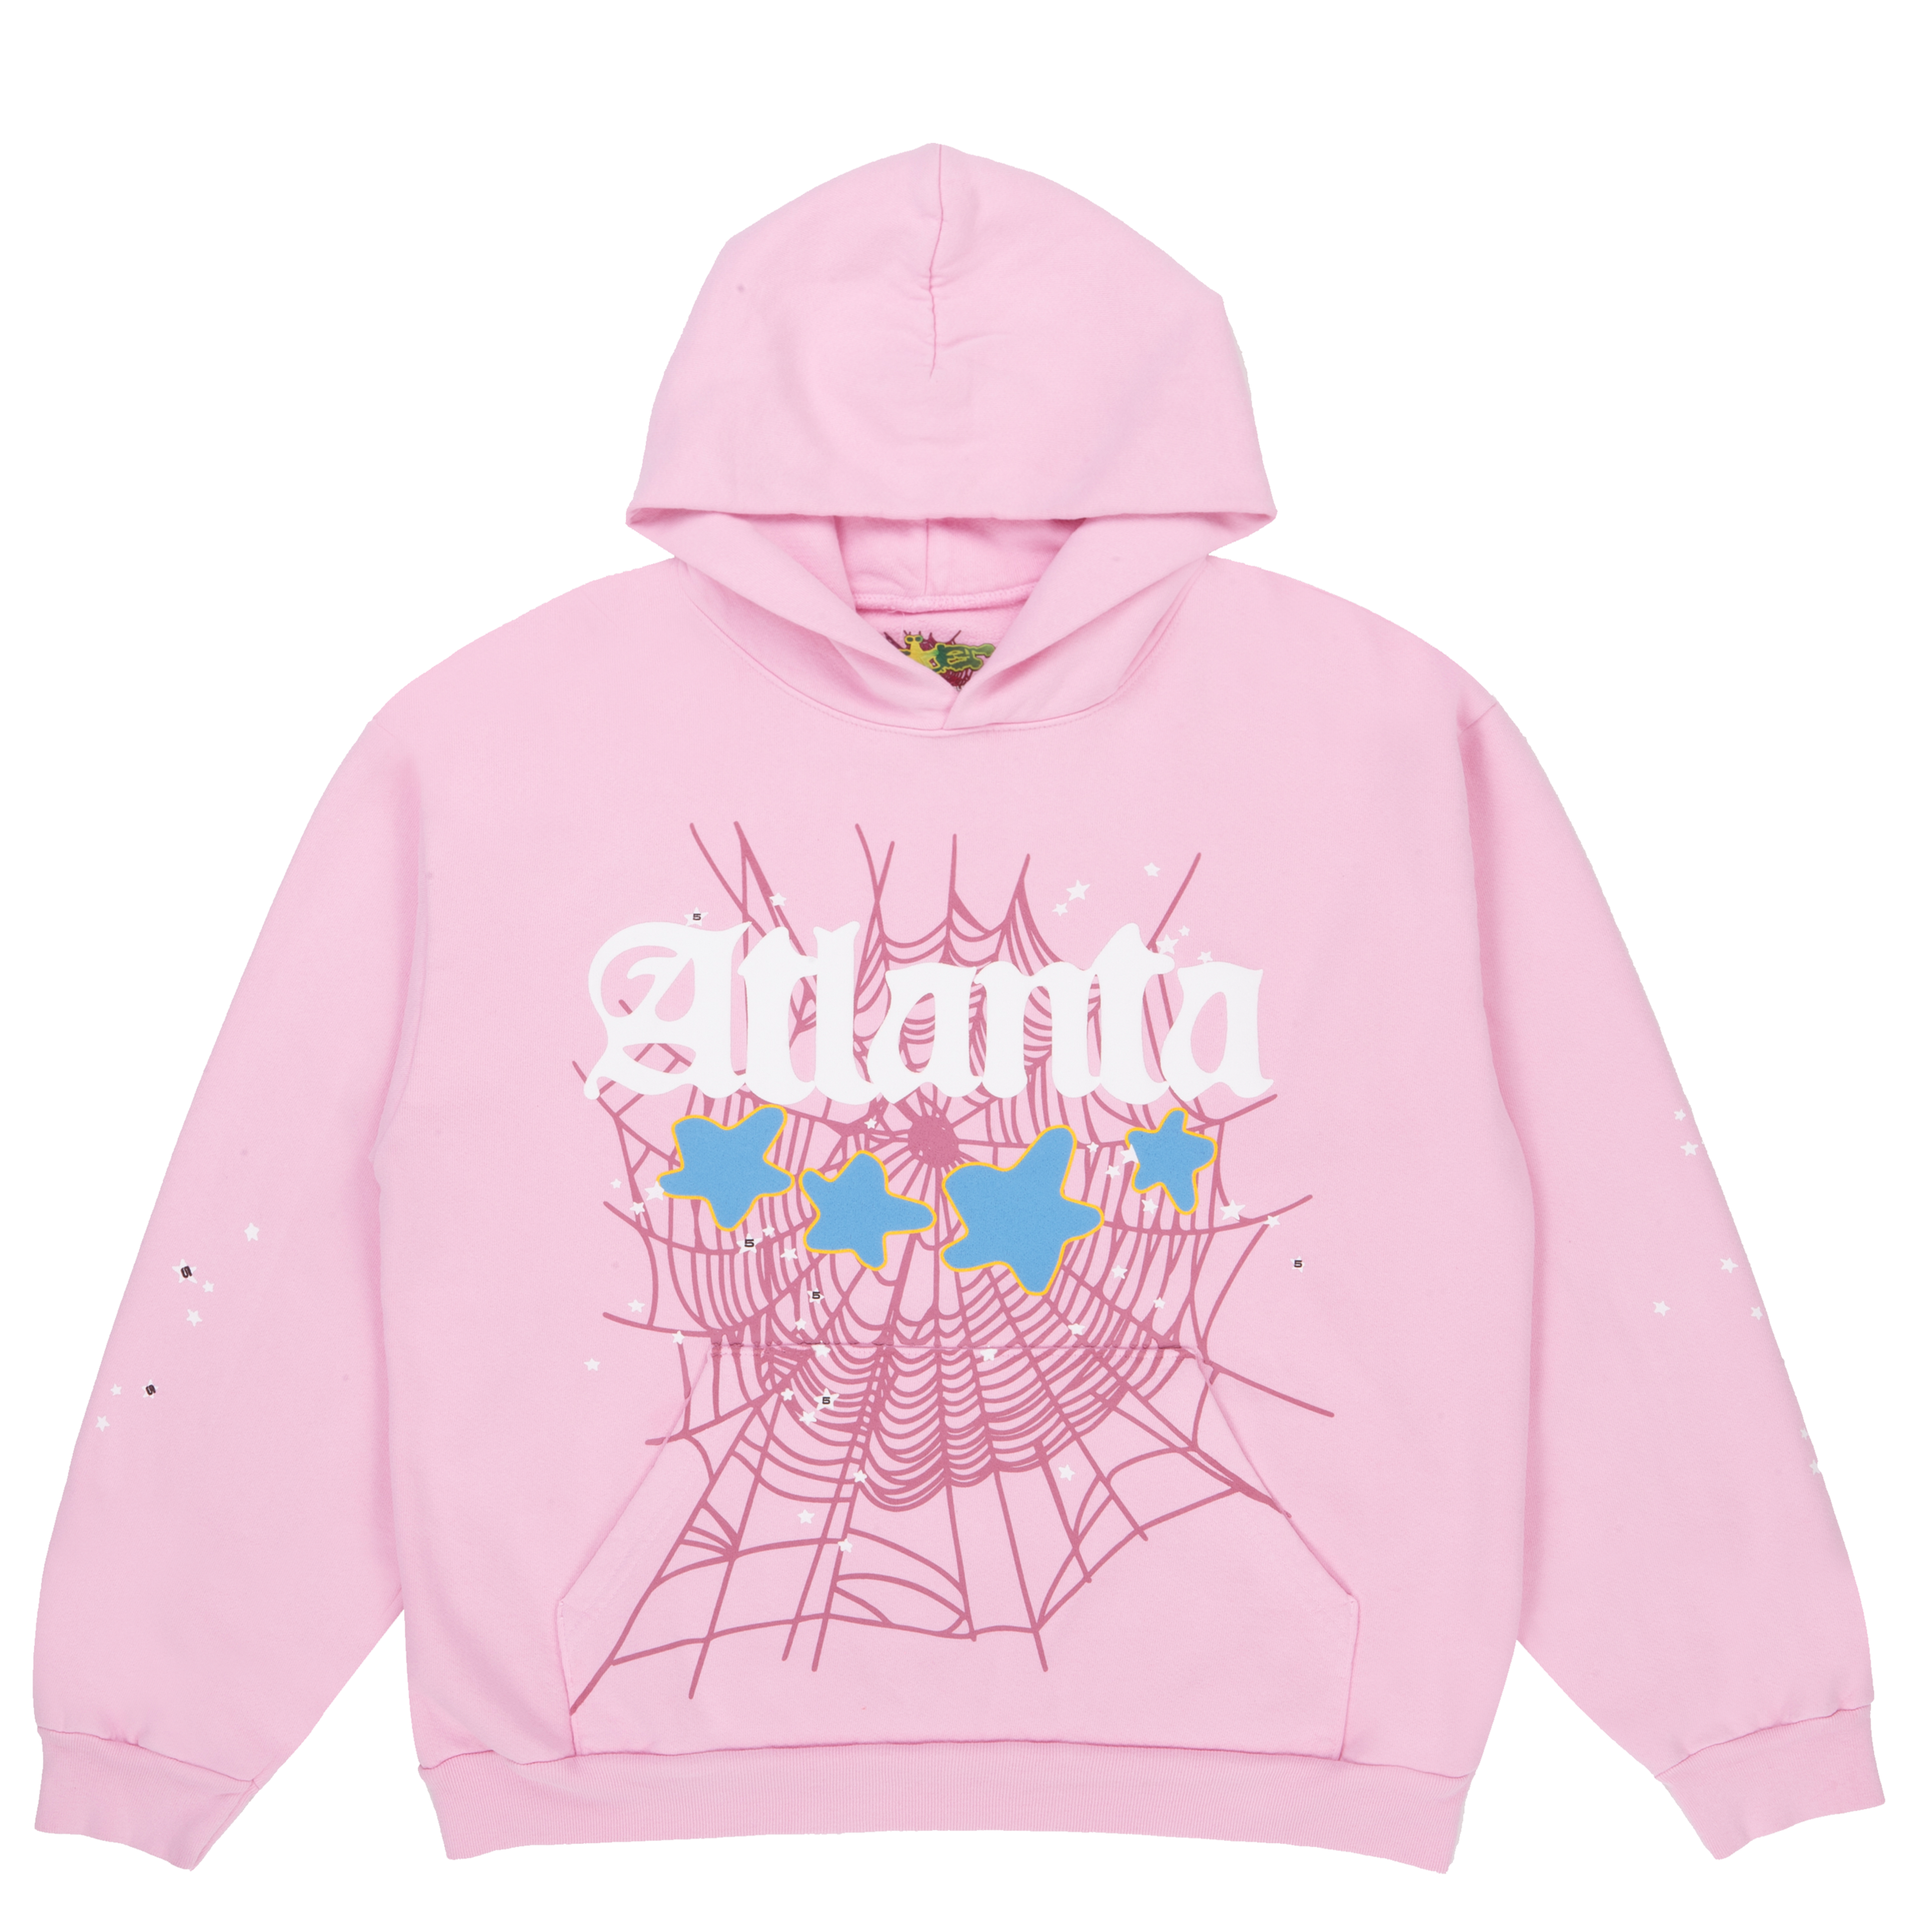 Sp5der Worldwide Atlanta Sweatshirt Pink